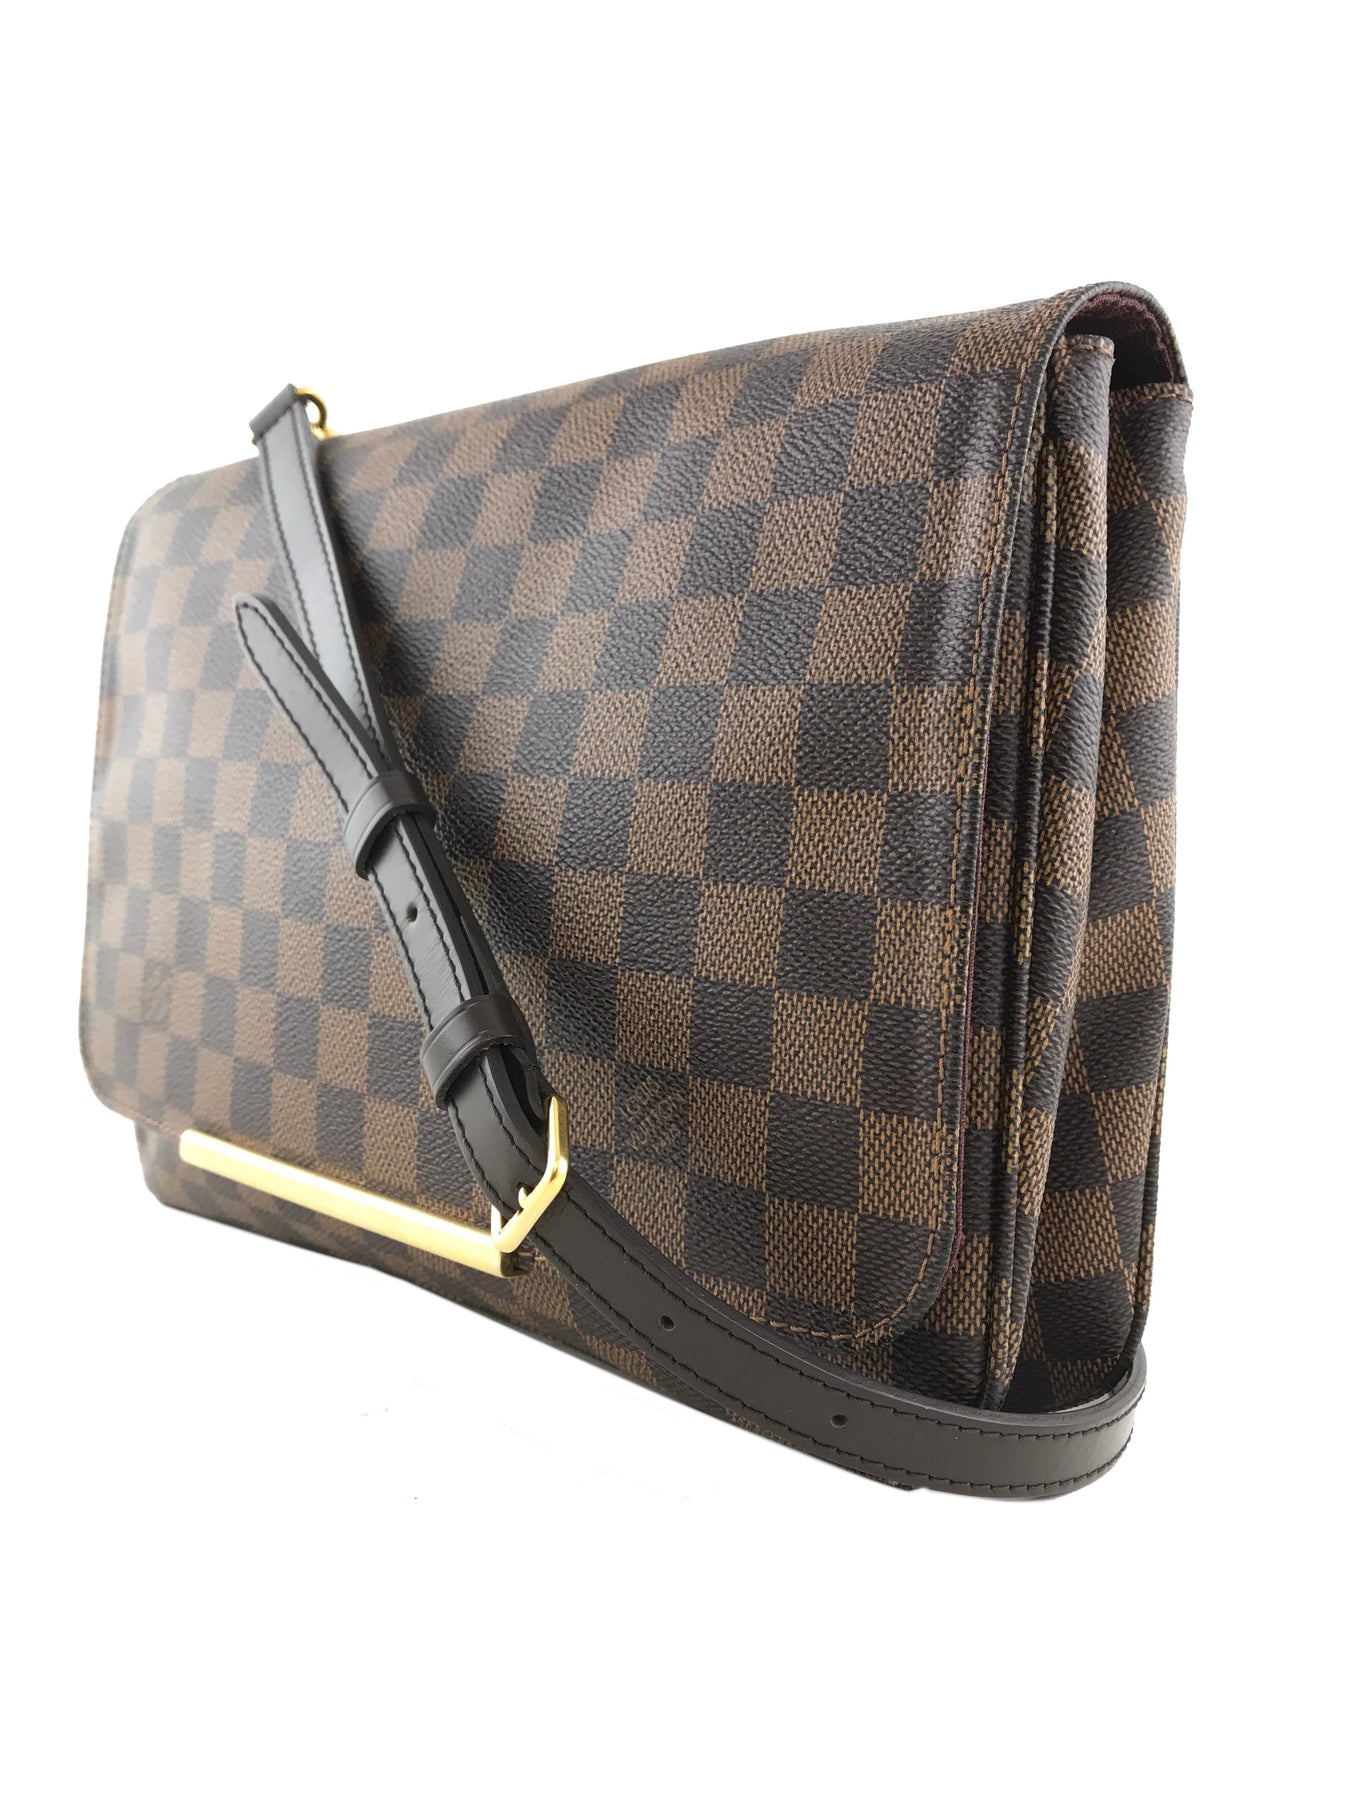 Louis Vuitton Damier Ebene Hoxton Shoulder Bag